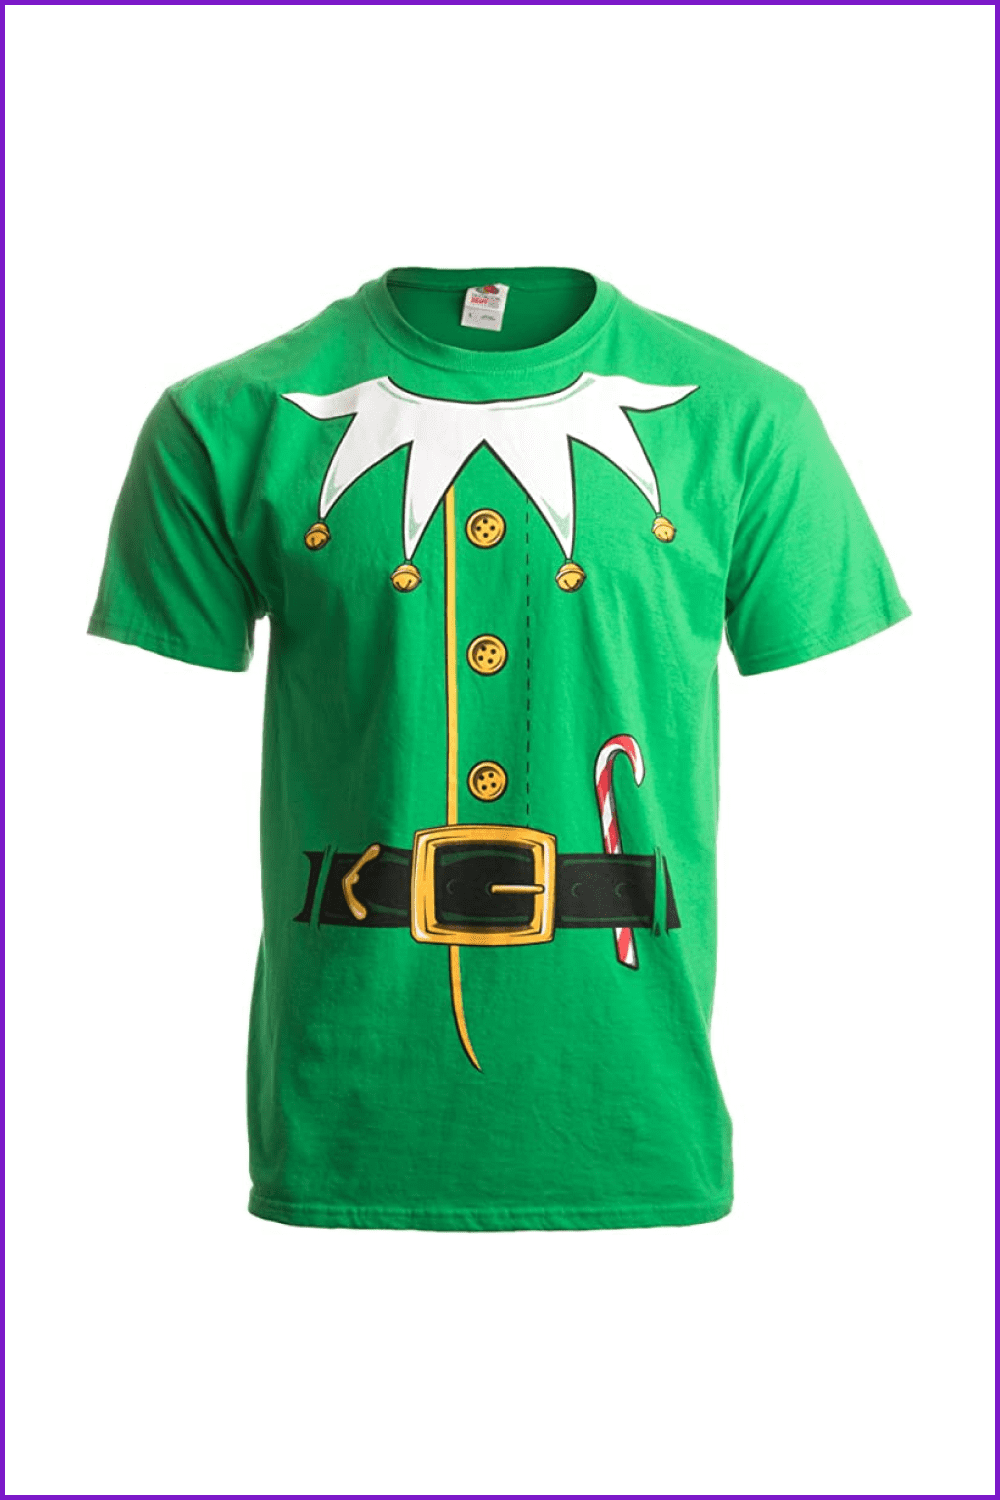 Green t-shirt with print of Santa's Elf costume.